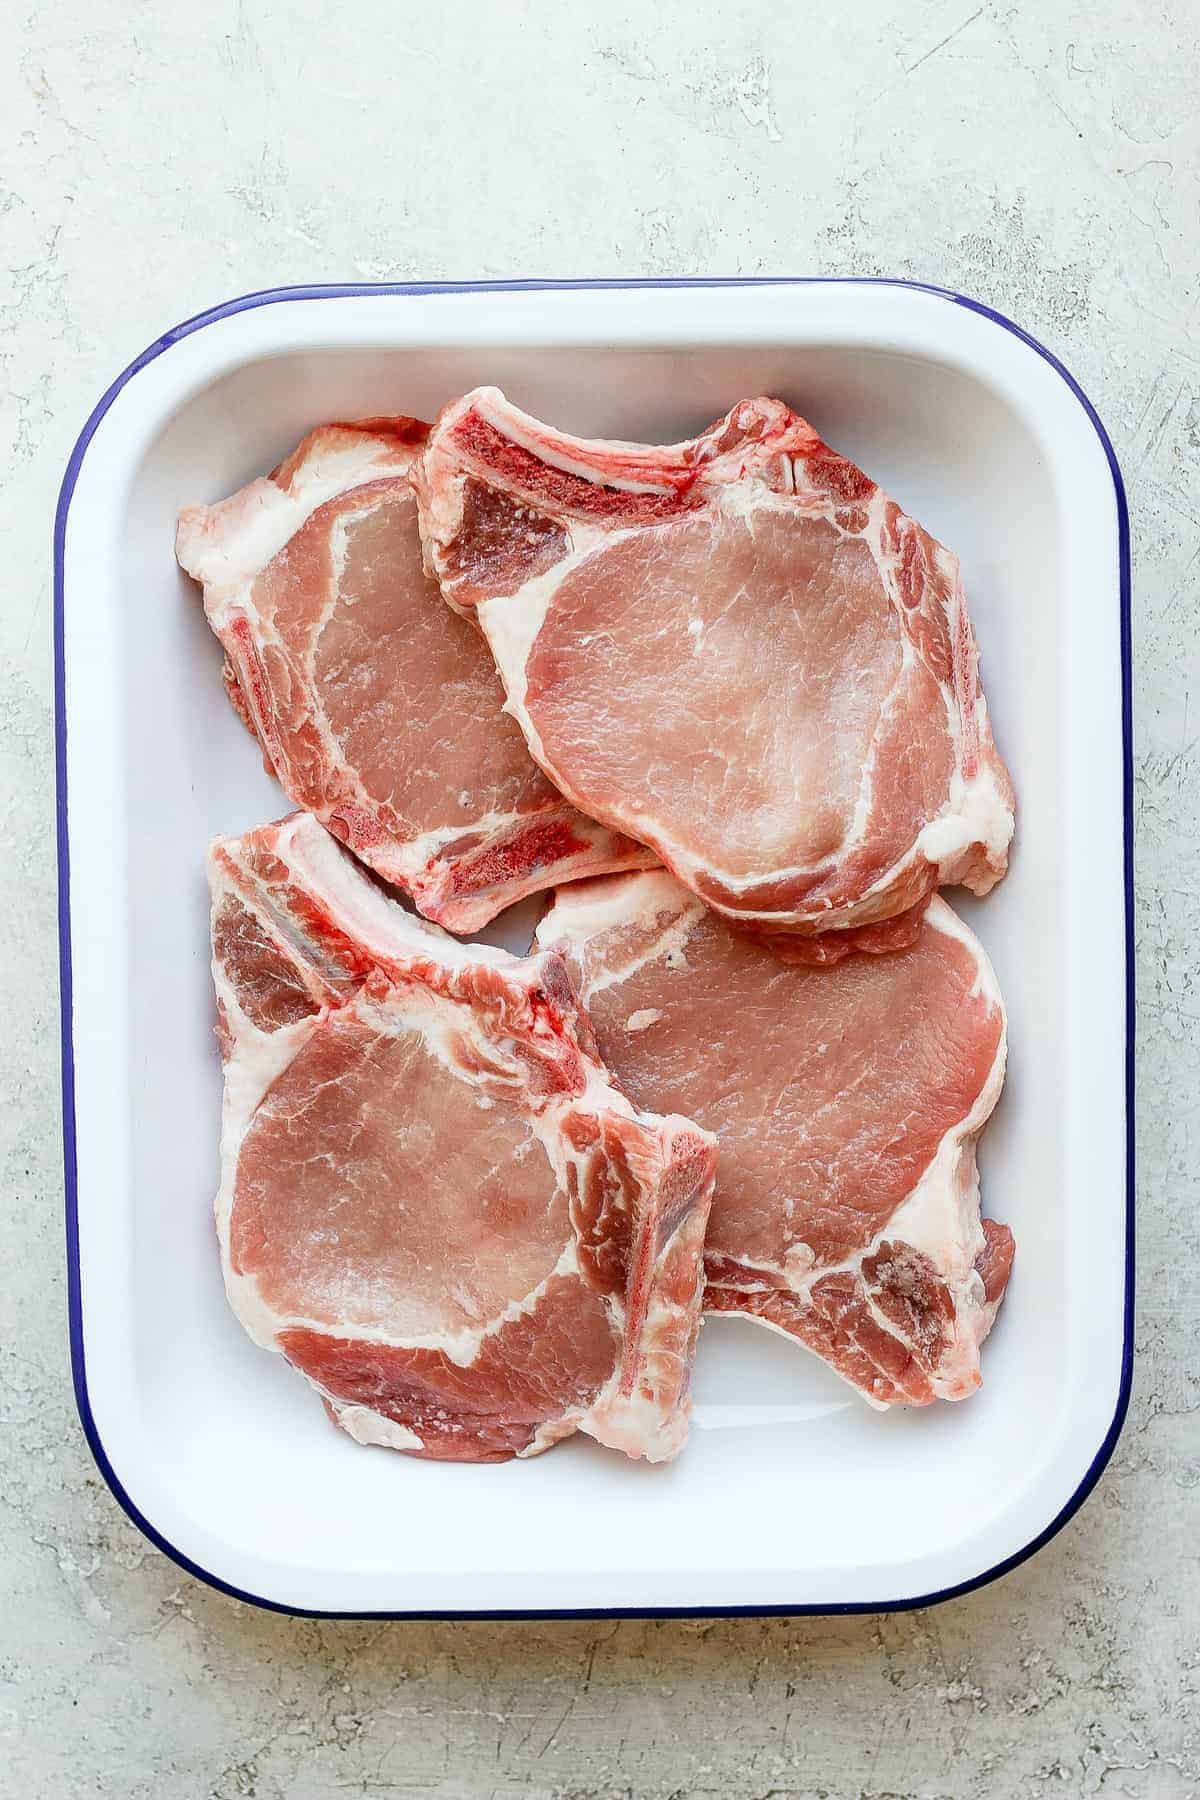 How to Grill Pork Chops (Juicy Grilled Pork Chops) - Karinokada